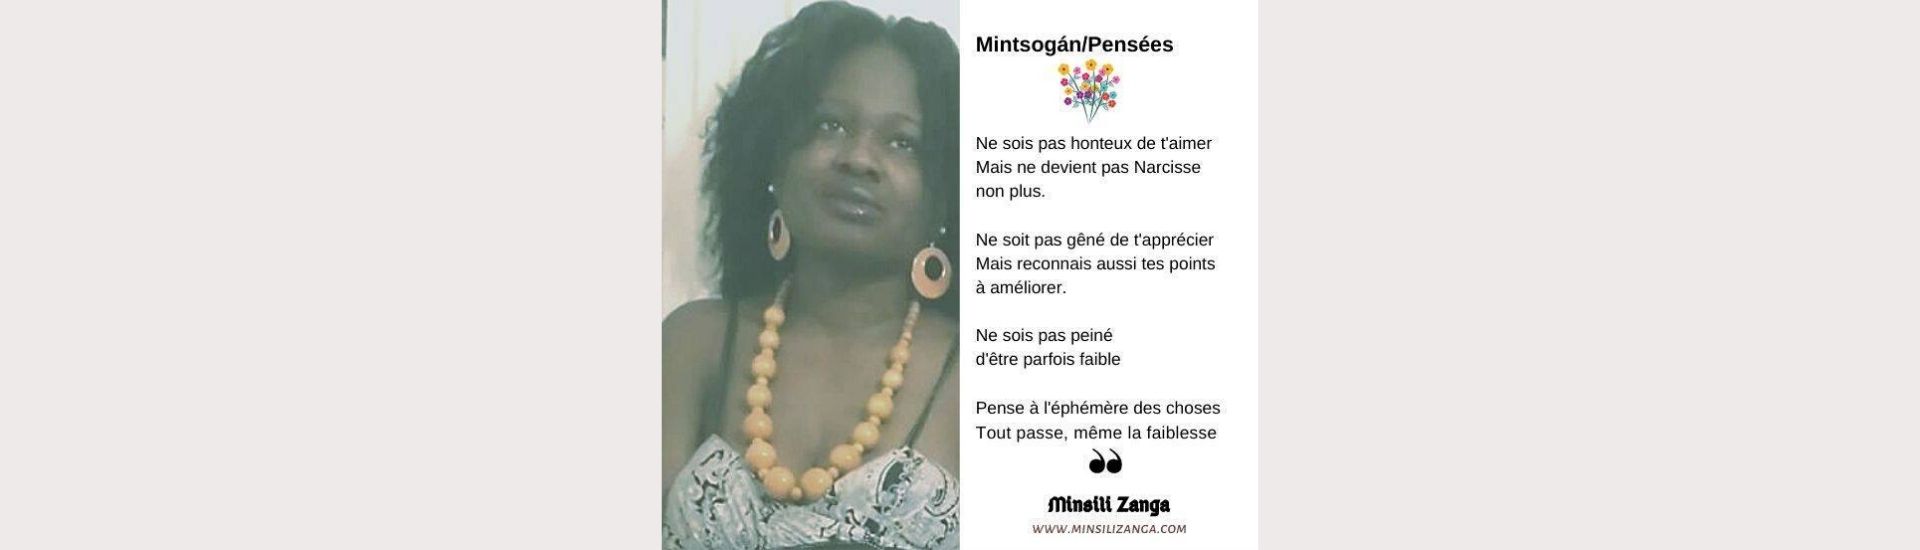 Minsili Zanga Poésie : amour de soi